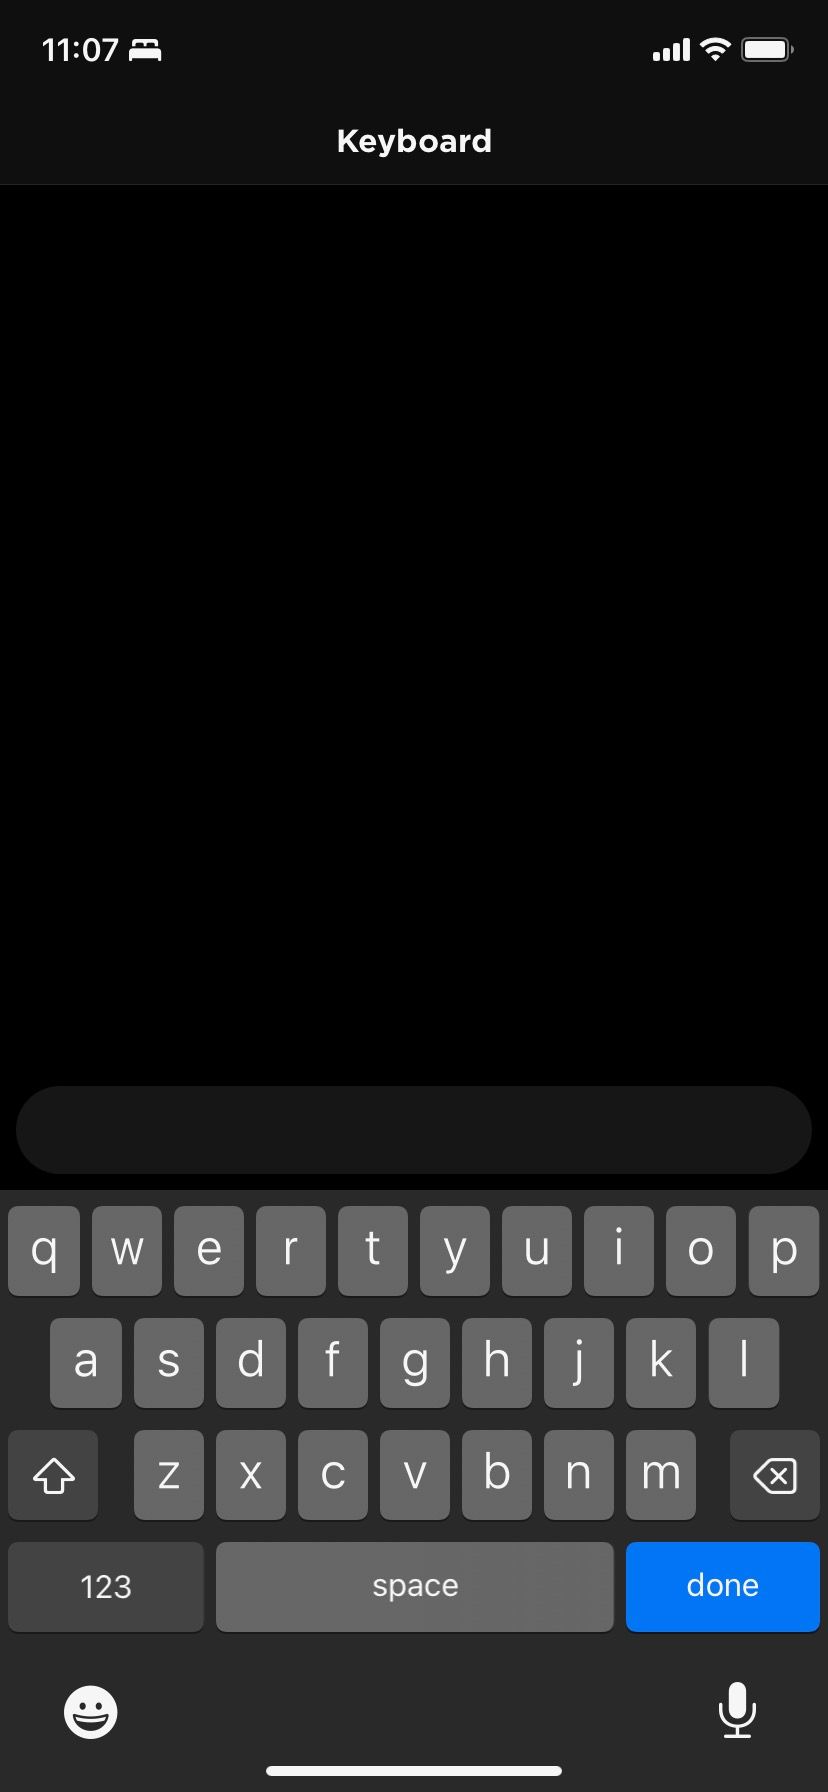 Keyboard in Roku remote control app